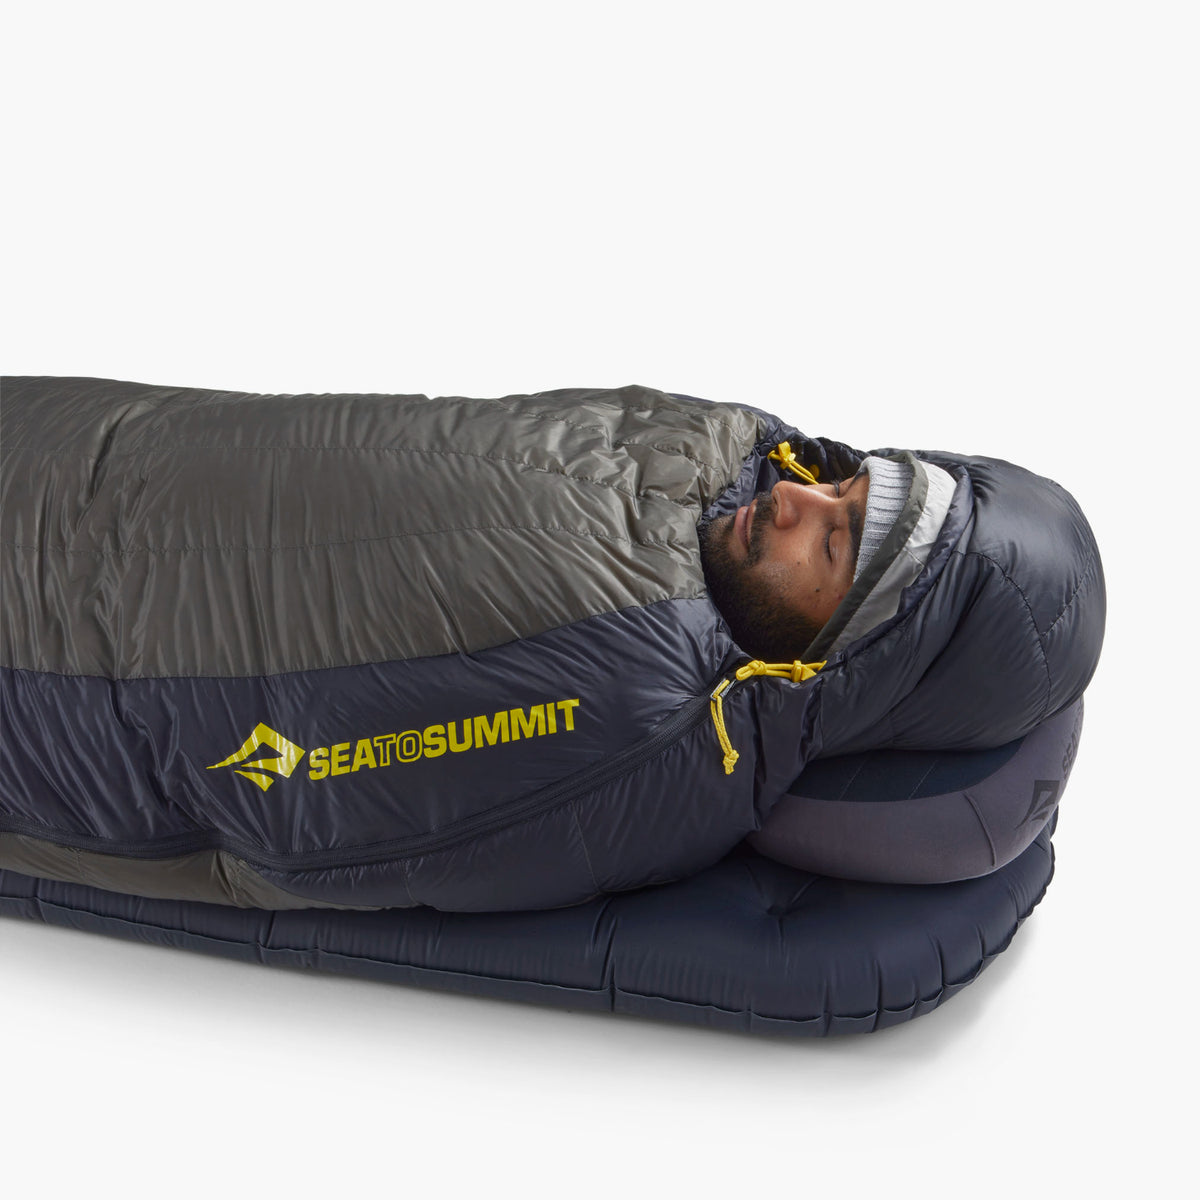 Sea to Summit Spark Pro Down Sleeping Bag -1°C